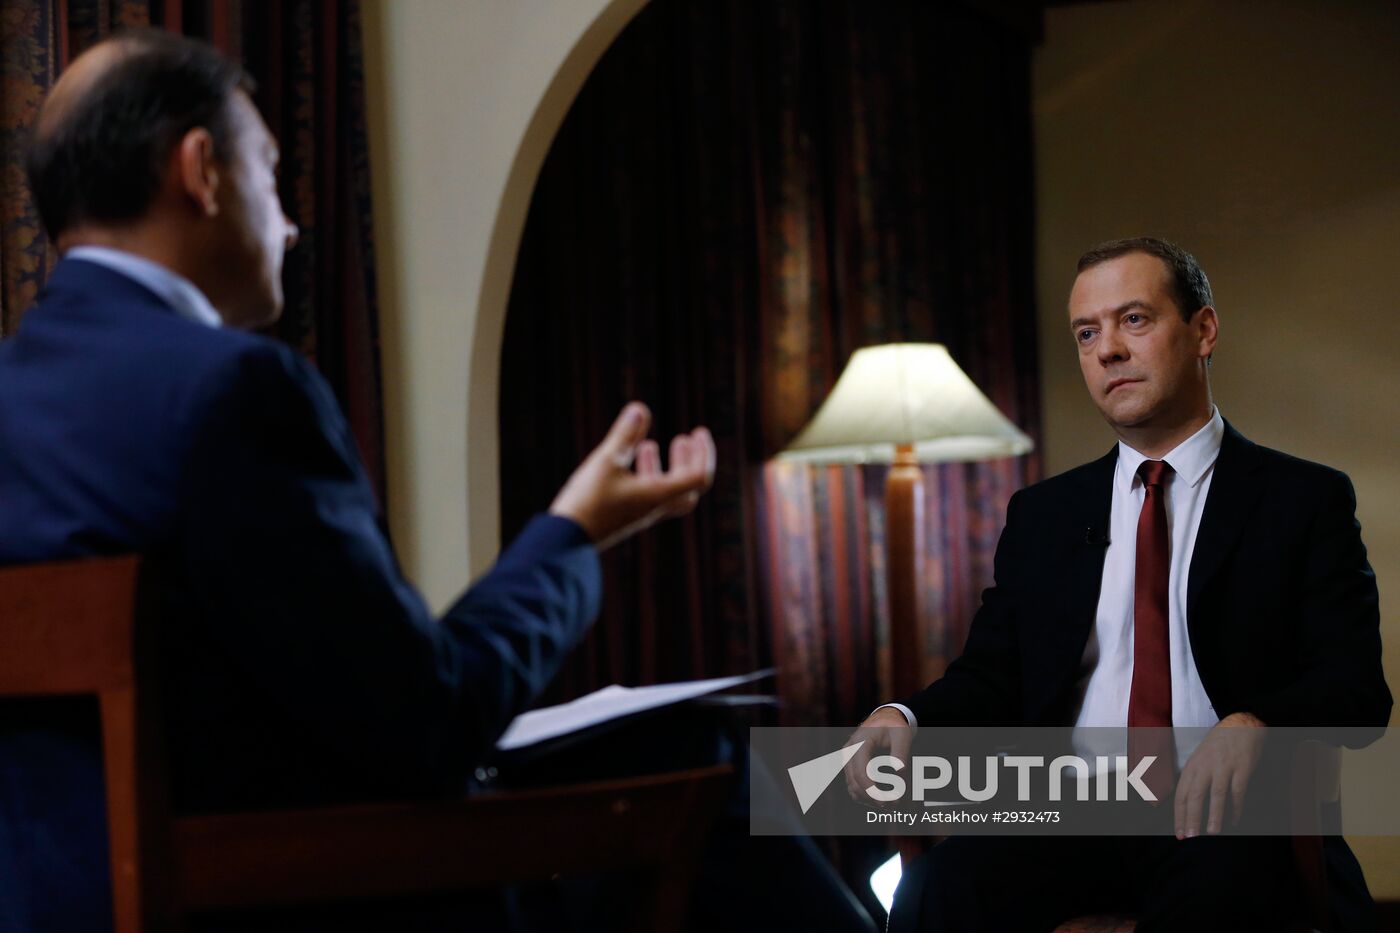 Dmitry Medvedev gives interview to Vesti v Subbotu (News on Saturday) host Sergei Brilyov